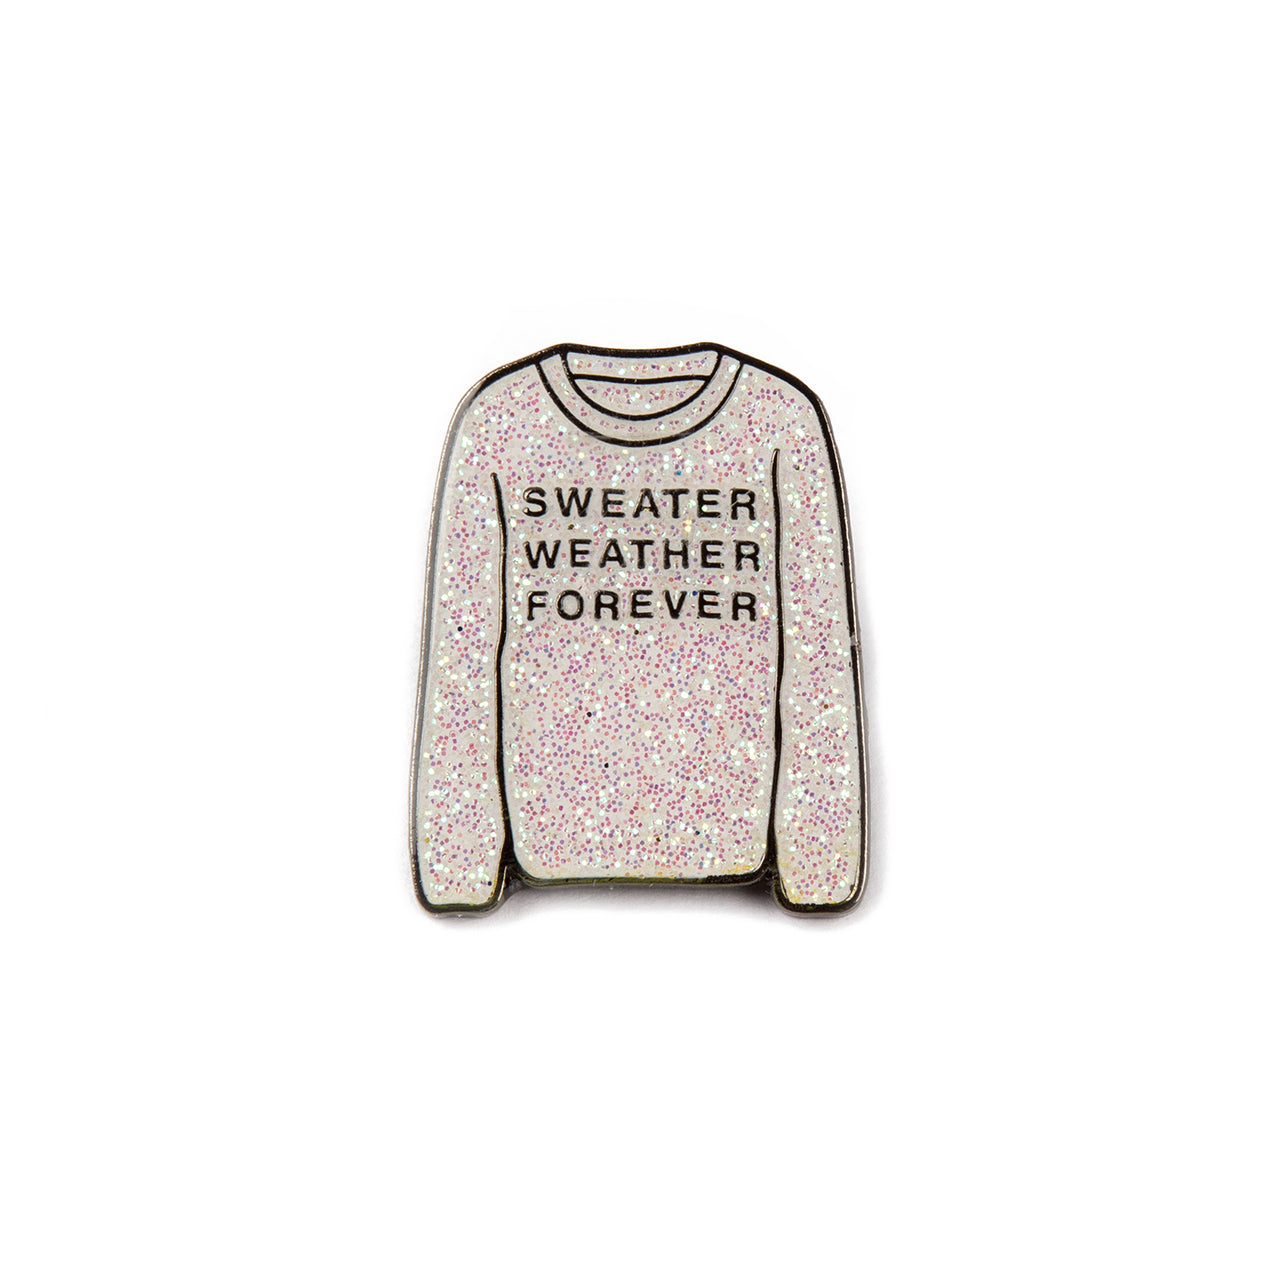 Sweater Weather Forever Enamel Pin (Glitter)